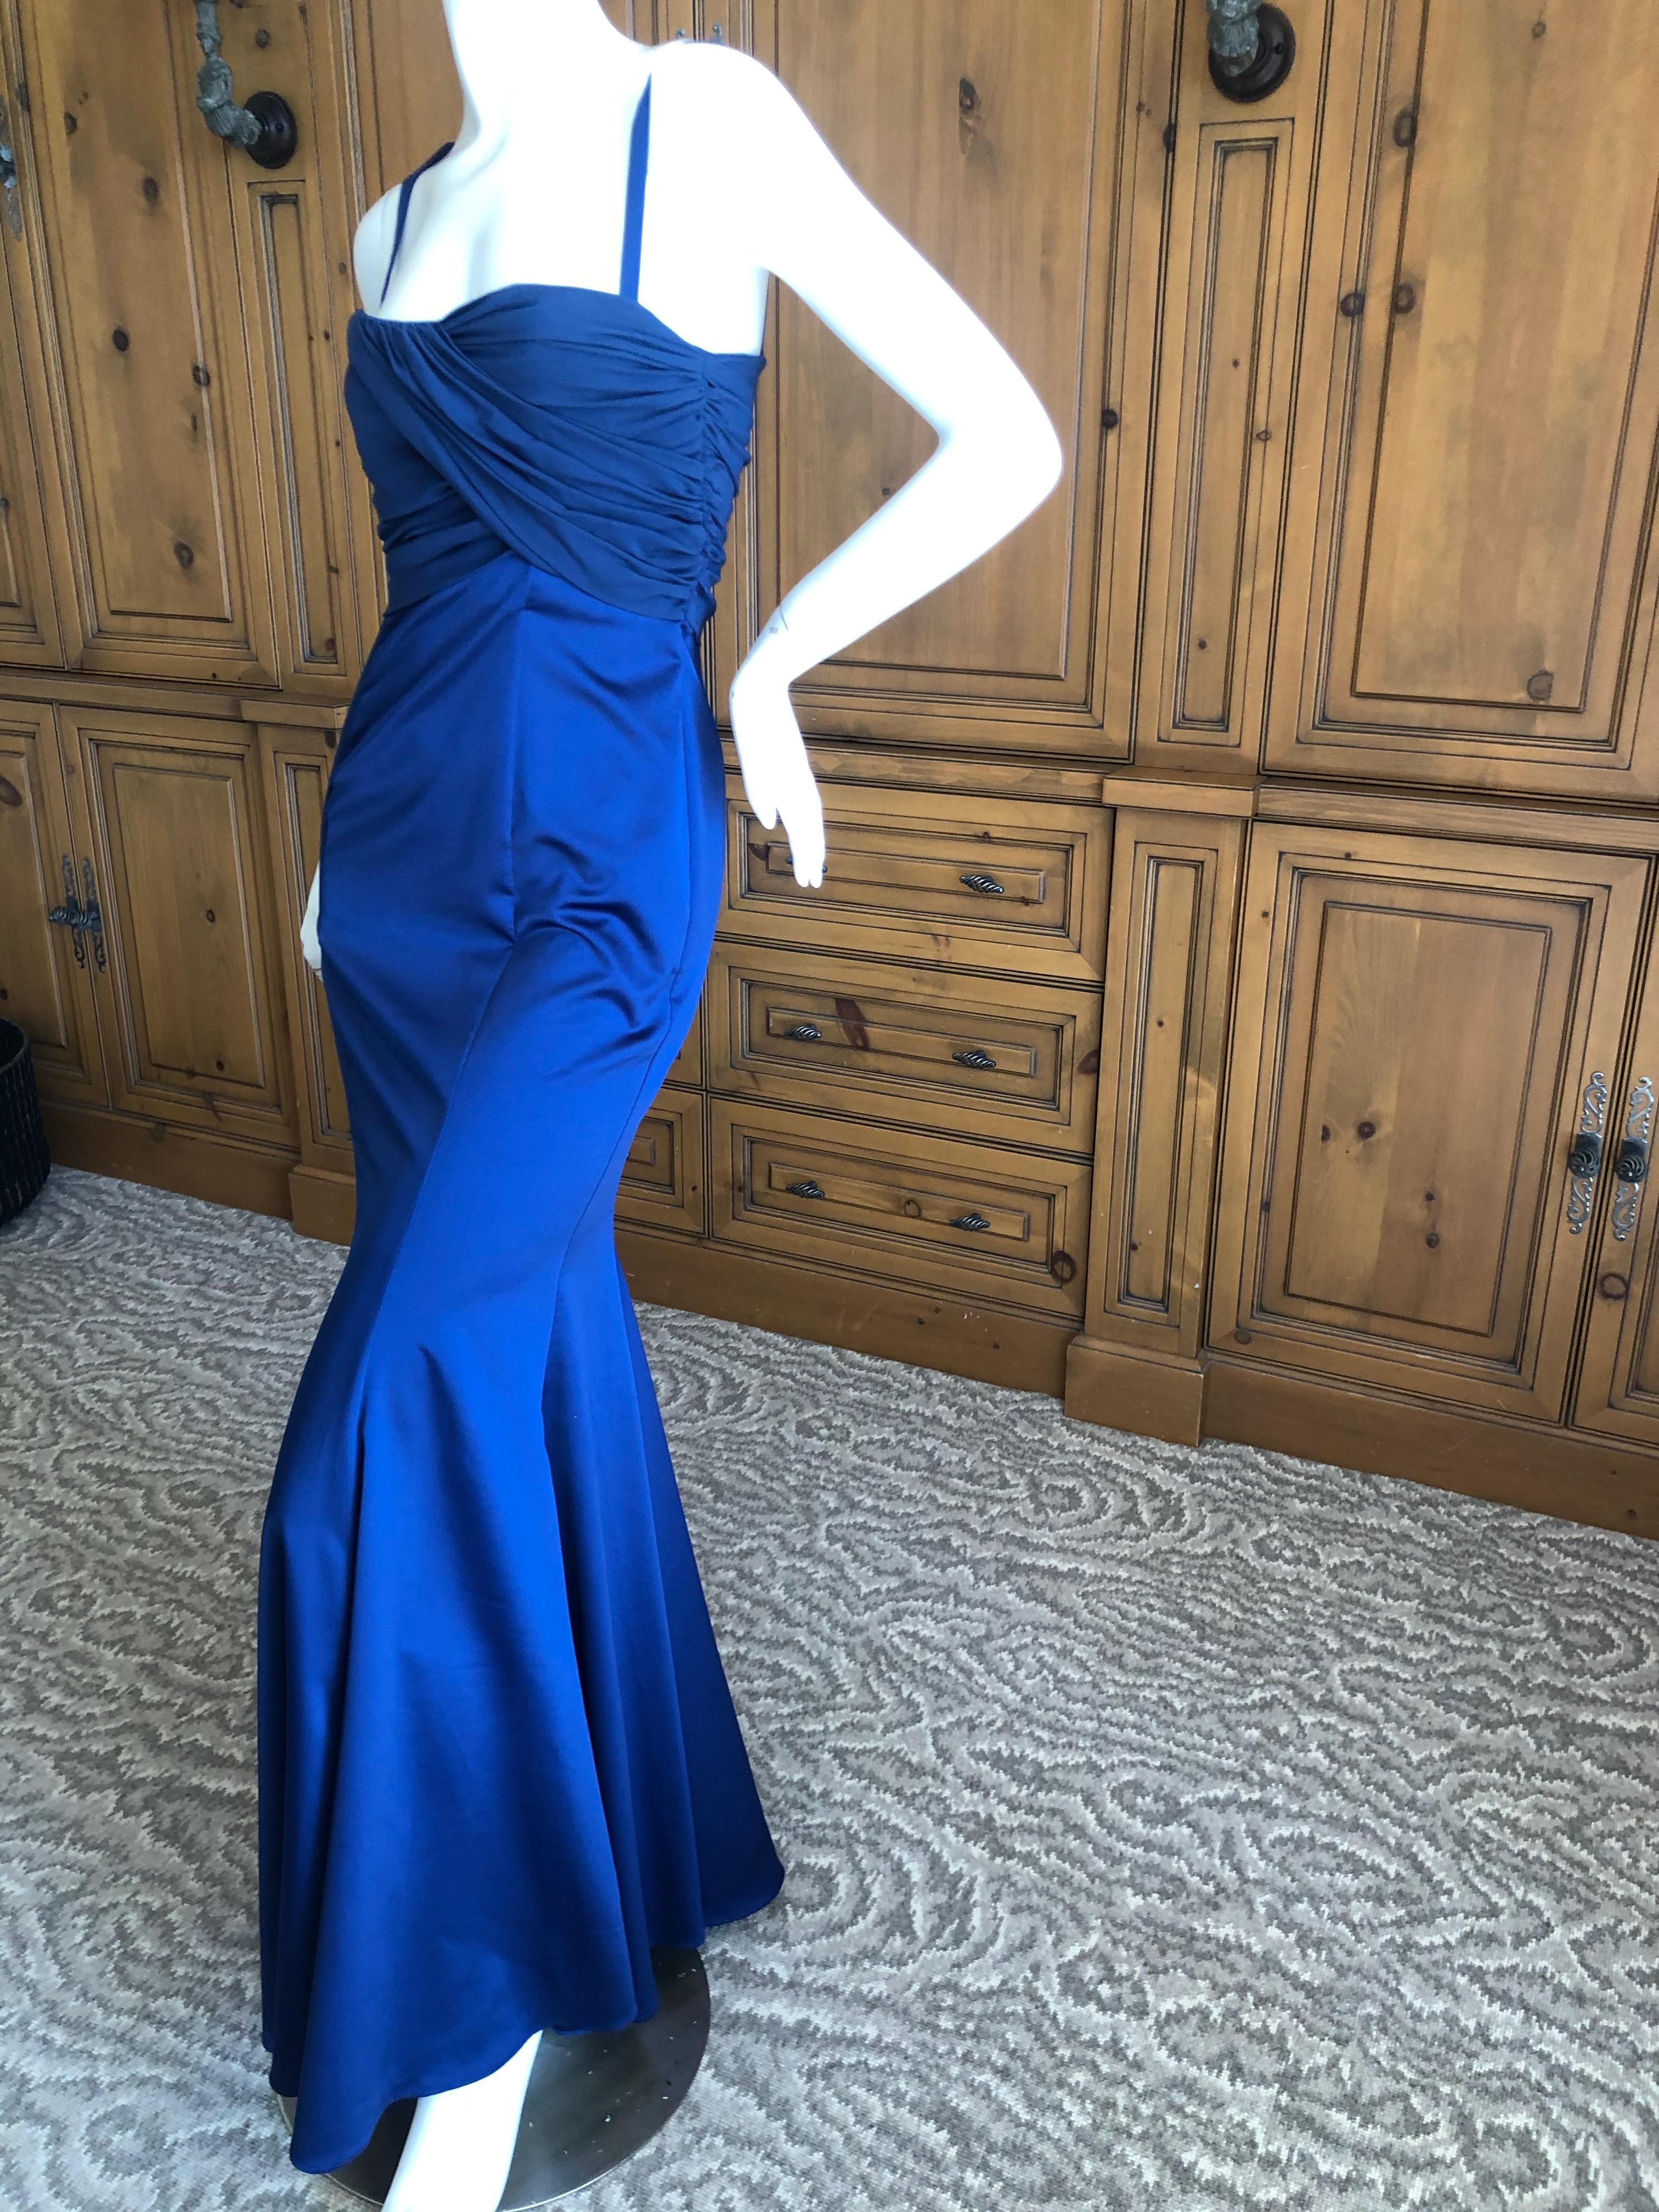  Roberto Cavalli for Just Cavalli Elegant Midnight Blue Evening Dress For Sale 1